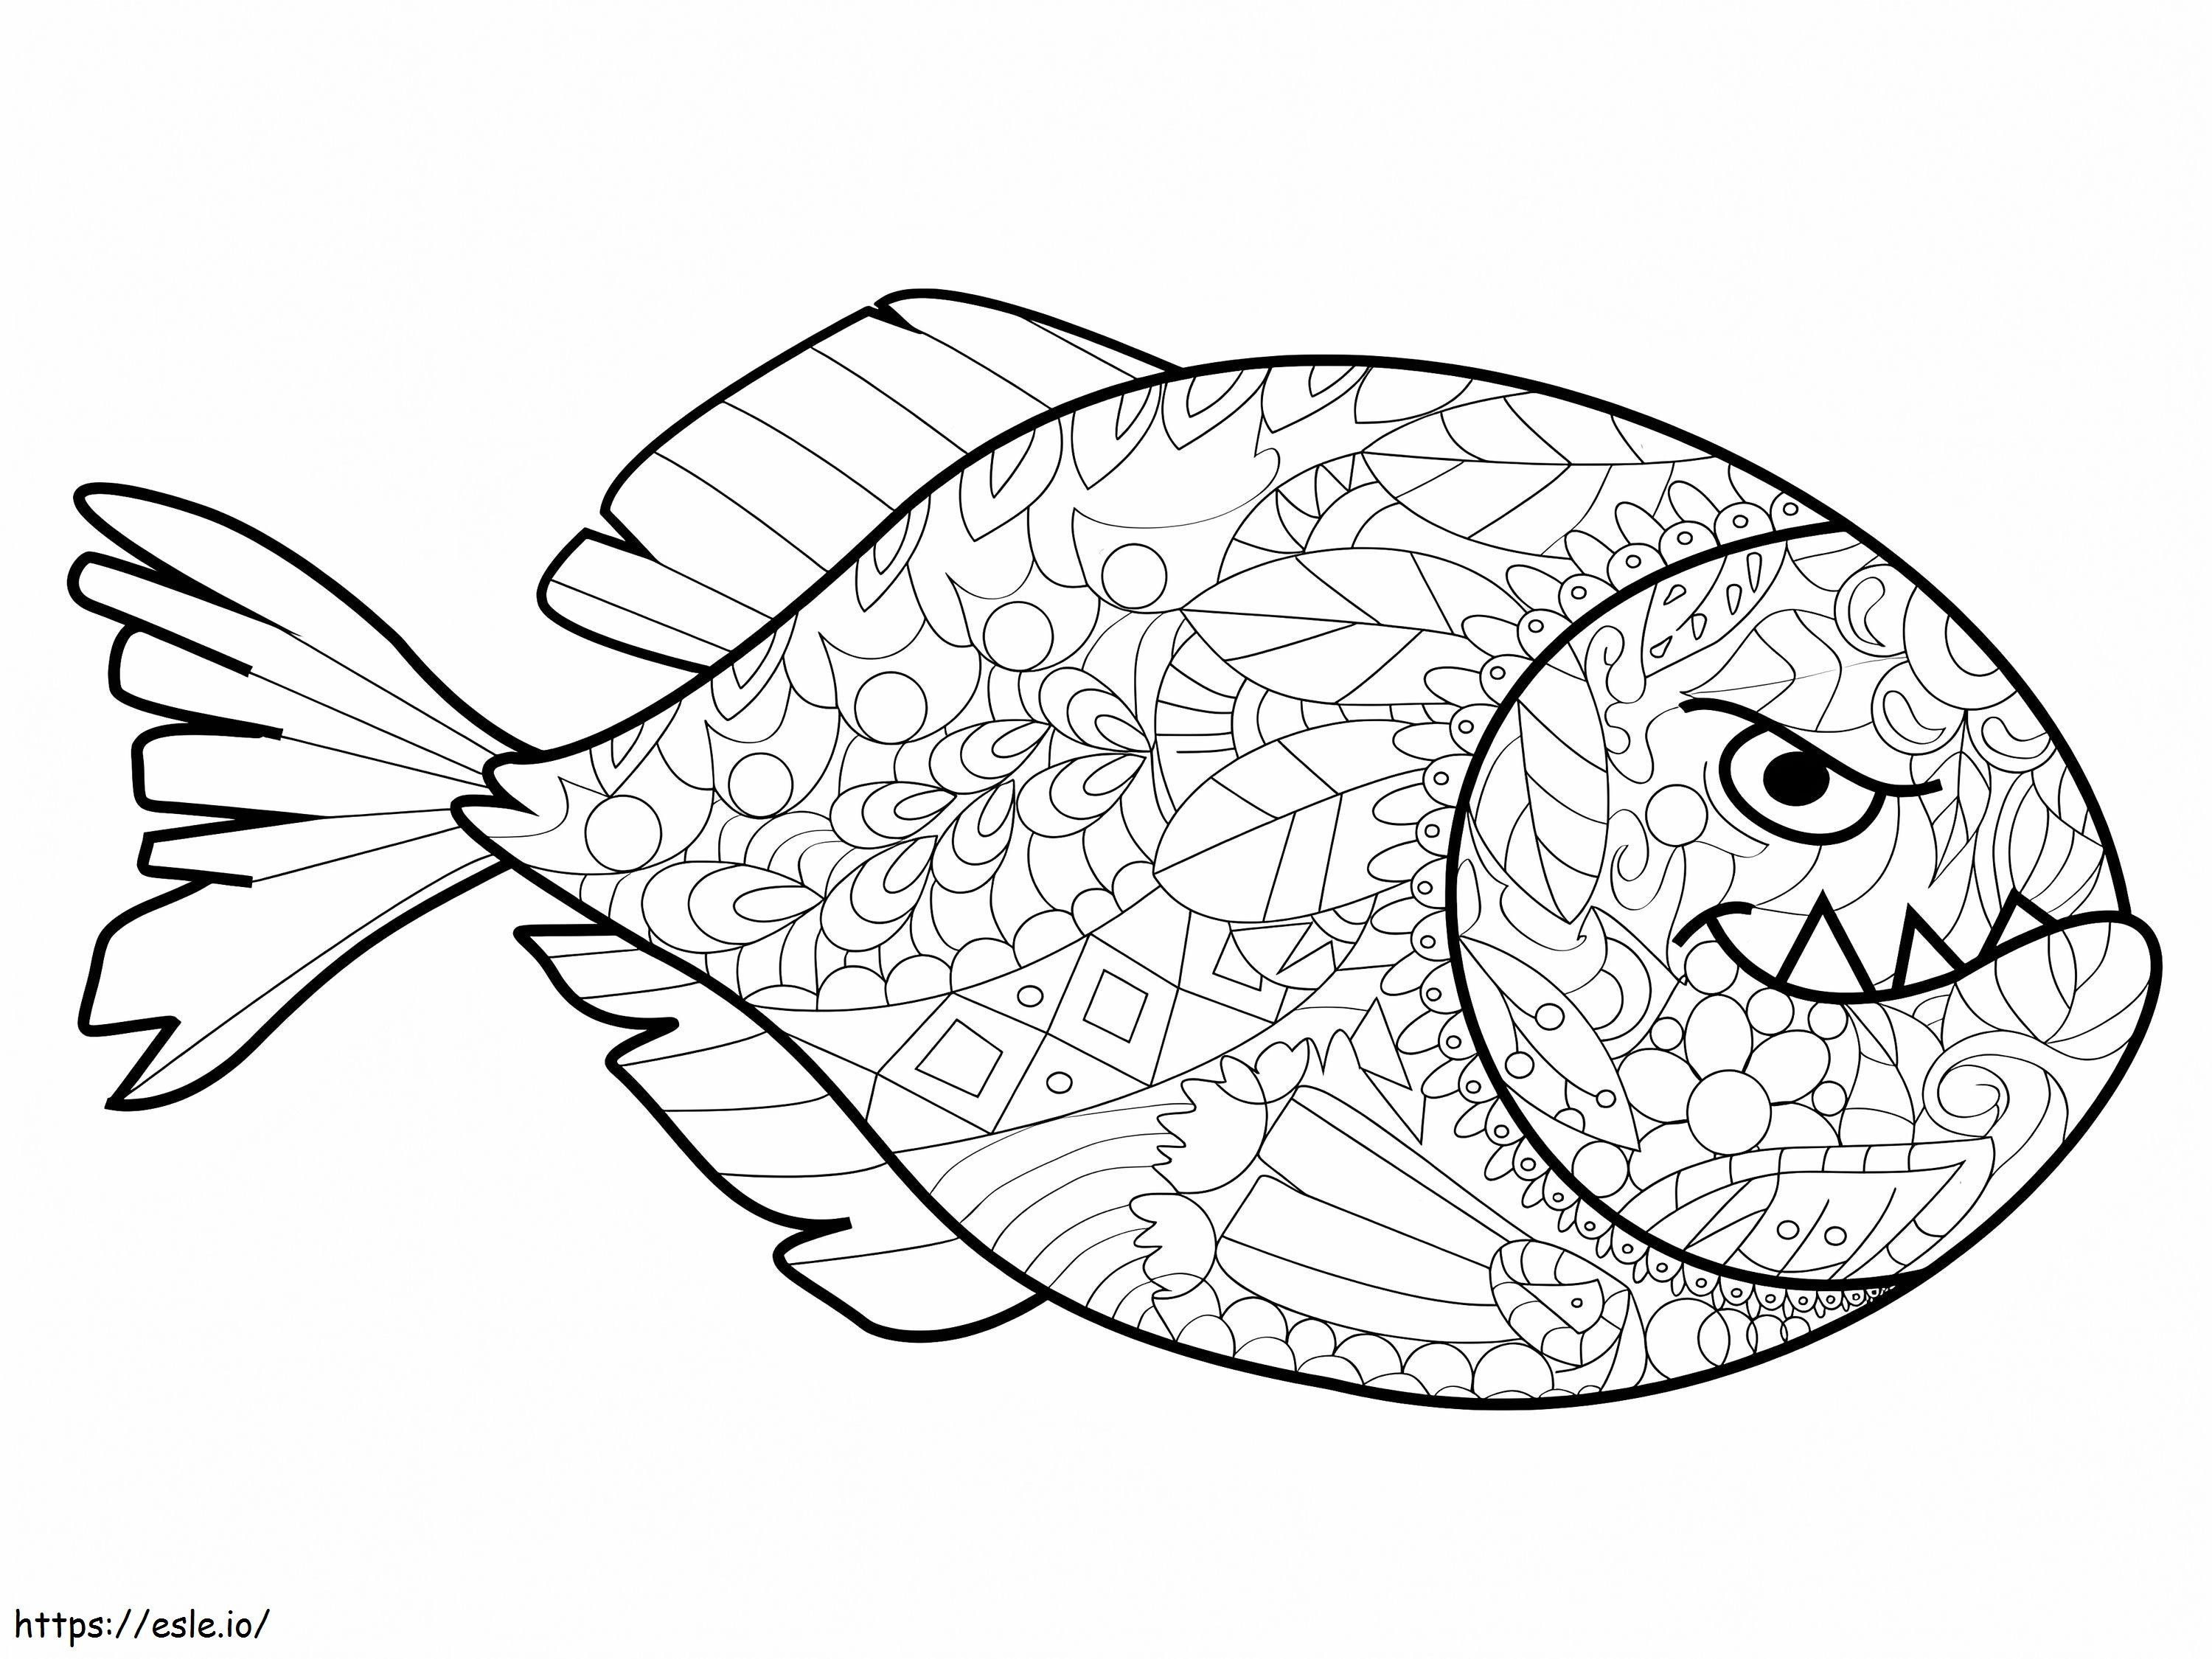 Coloriage Zentangle Piranha à imprimer dessin